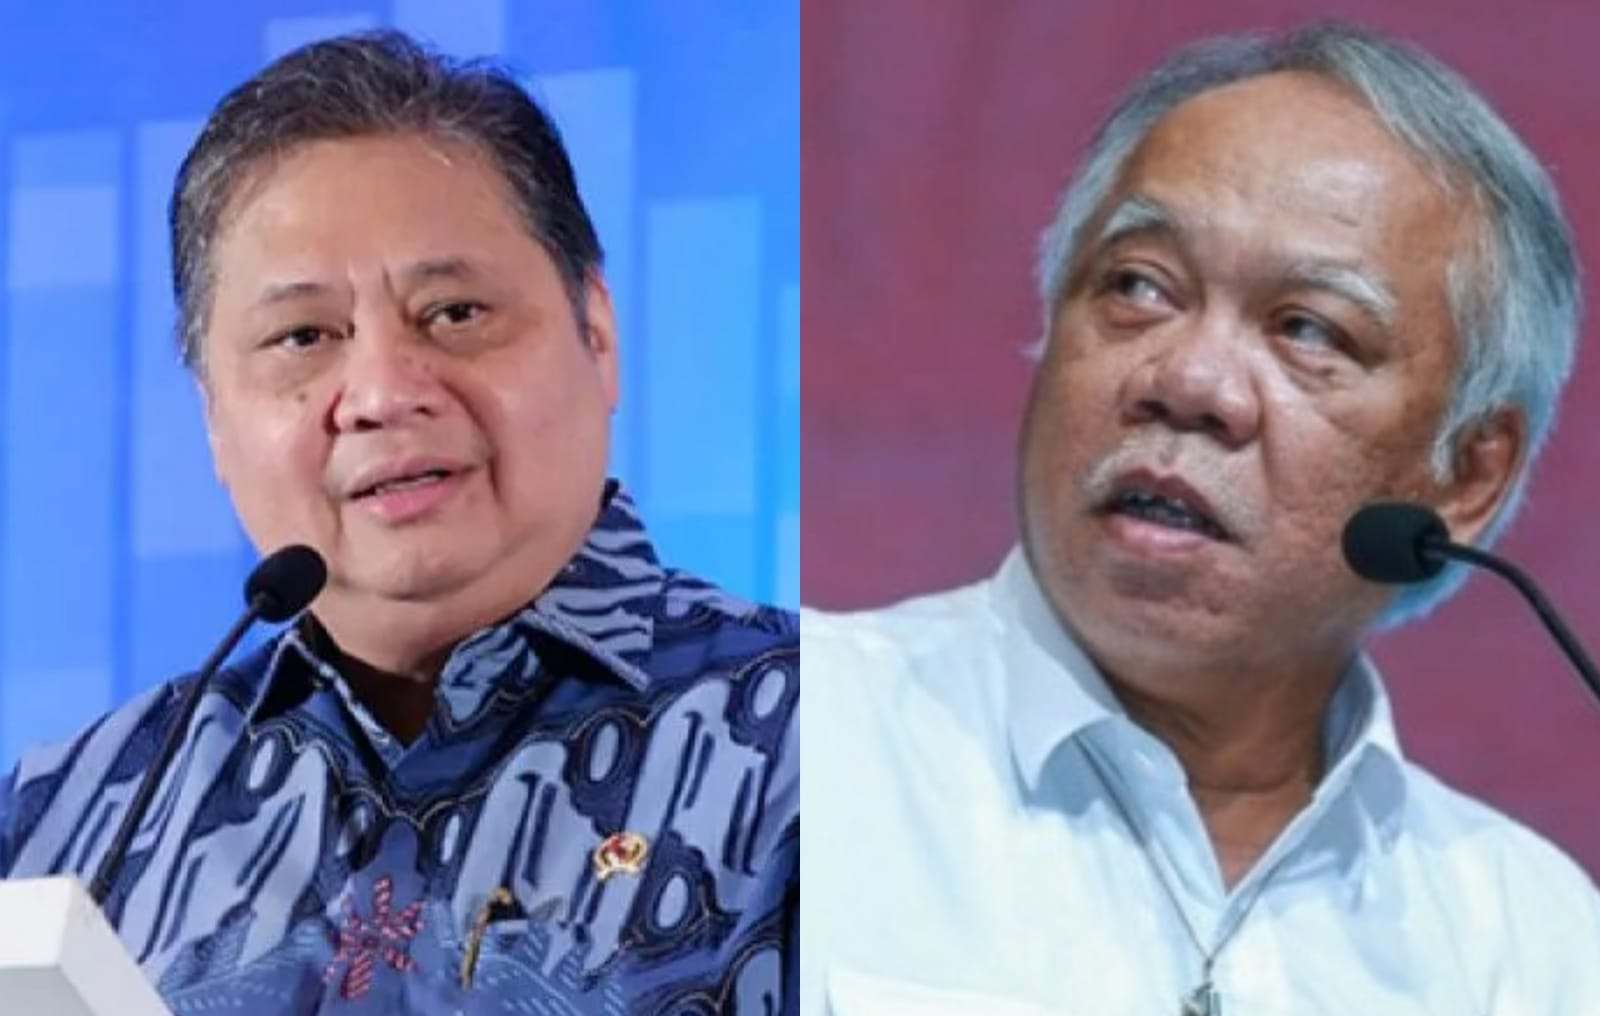 Kekayaan Fantastis Airlangga Hartarto dan Basuki Hadimuljono, Menteri Pertama akan Tinggal di IKN